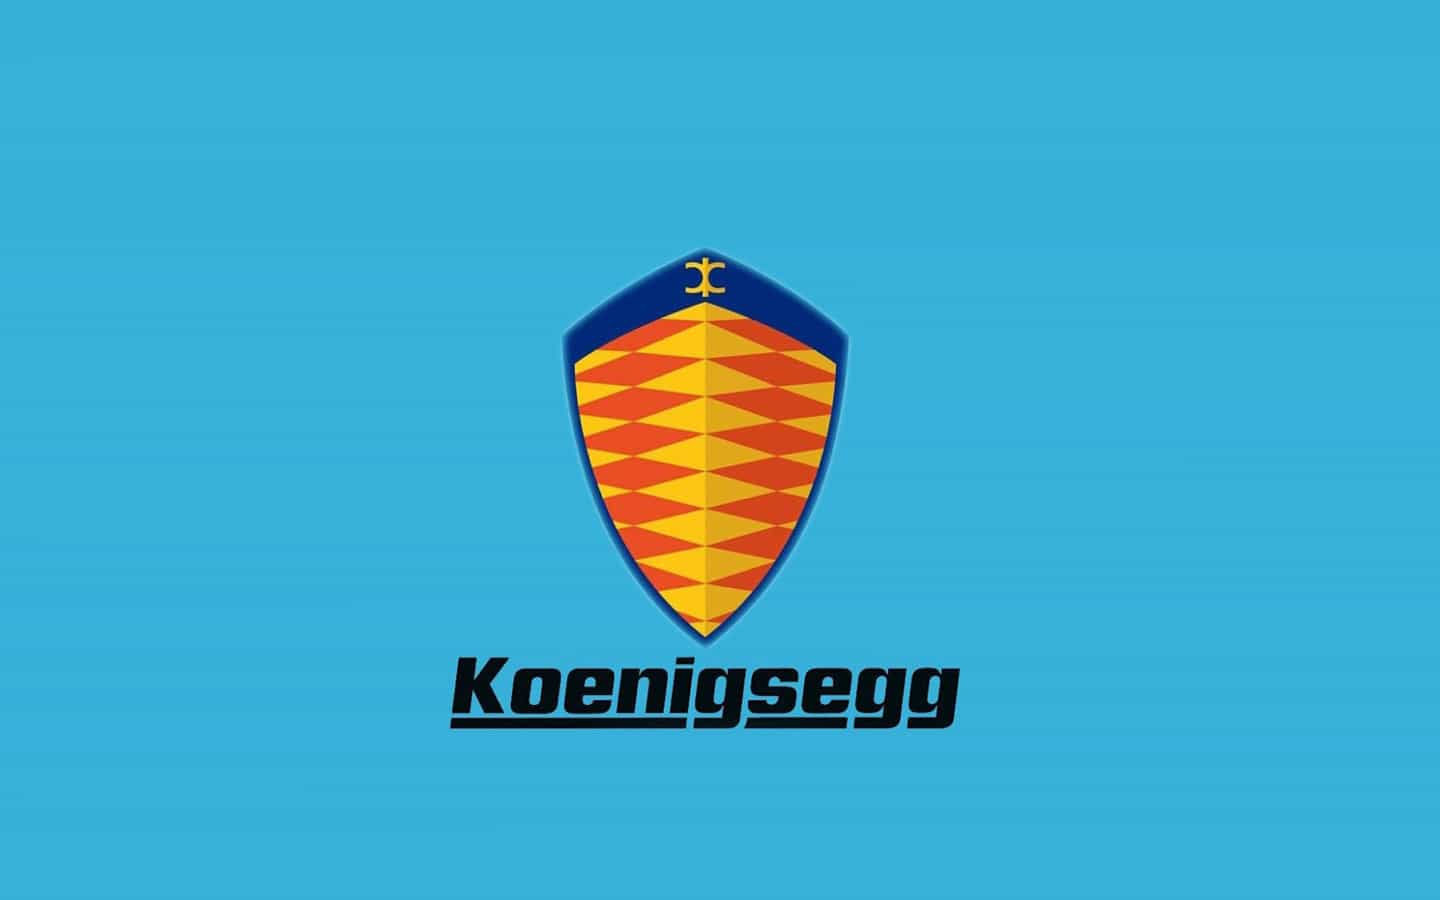 Koenigsegg Logo - Koenigsegg Logo Wallpaper With Wallpapers WI4K Net 5 - Car SUV Truck